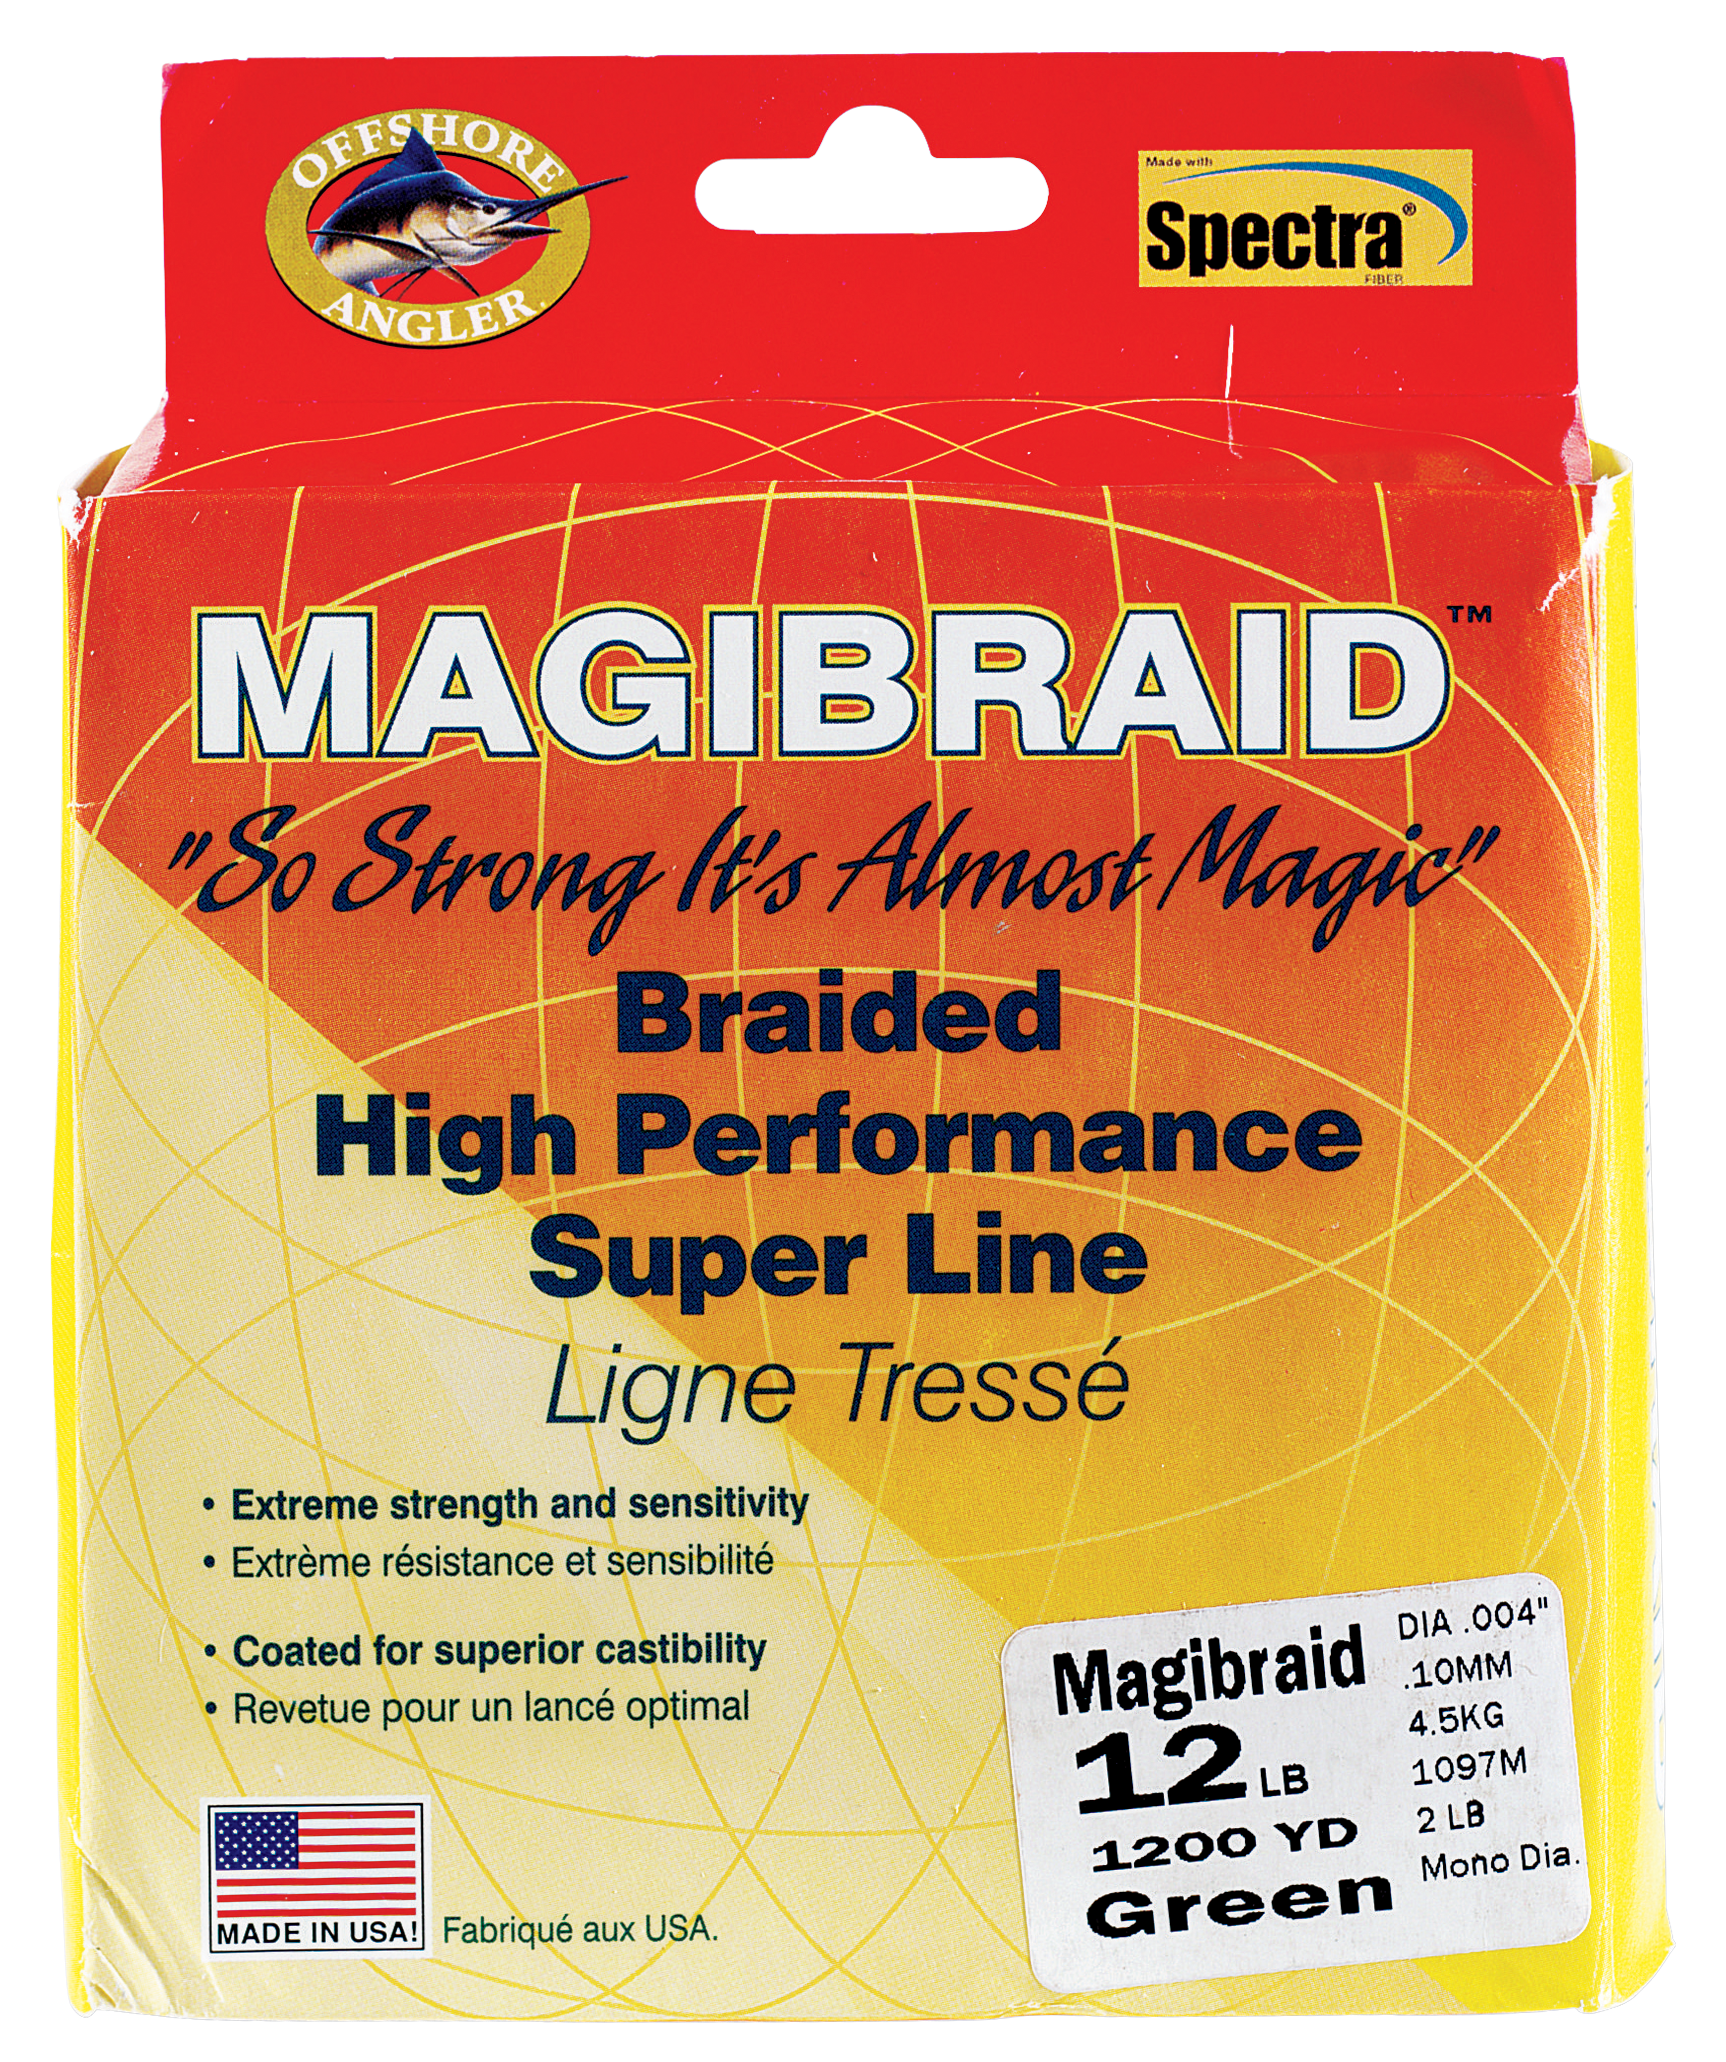 Offshore Angler Magibraid Spectra Fiber Fishing Line - 300 Yards